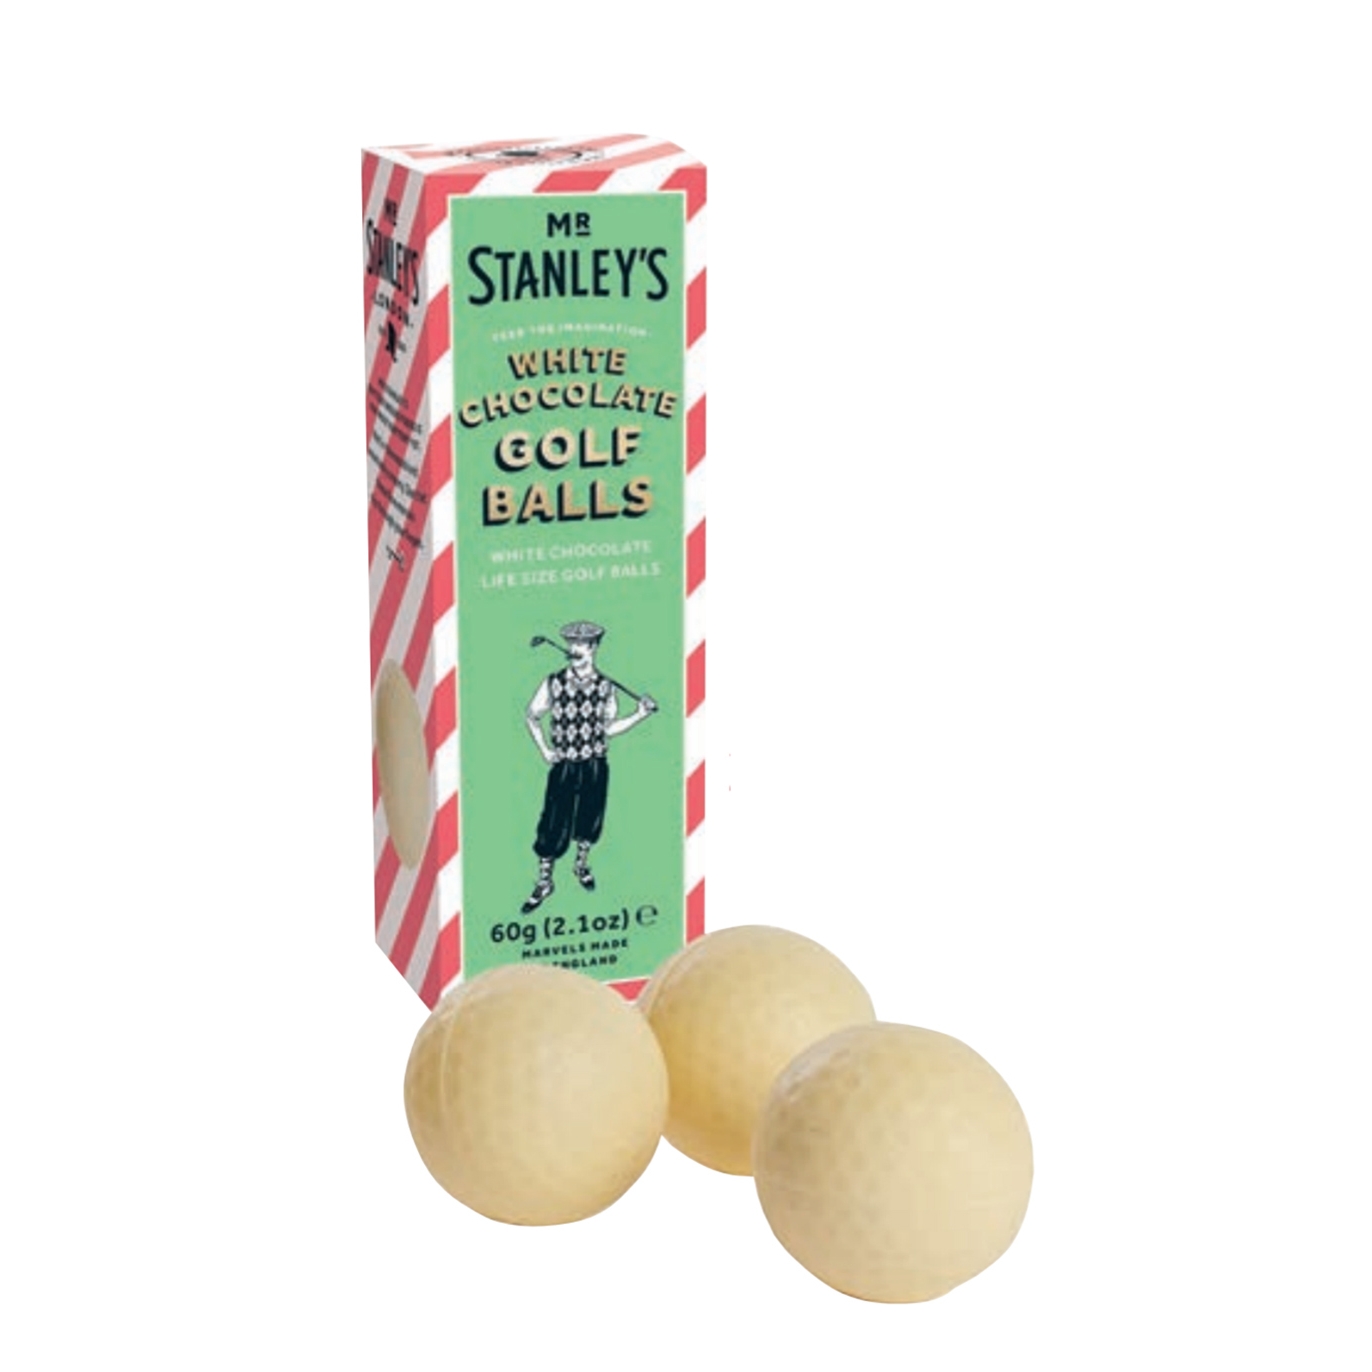 Mr Stanley's White Chocolate Golf Balls 60g